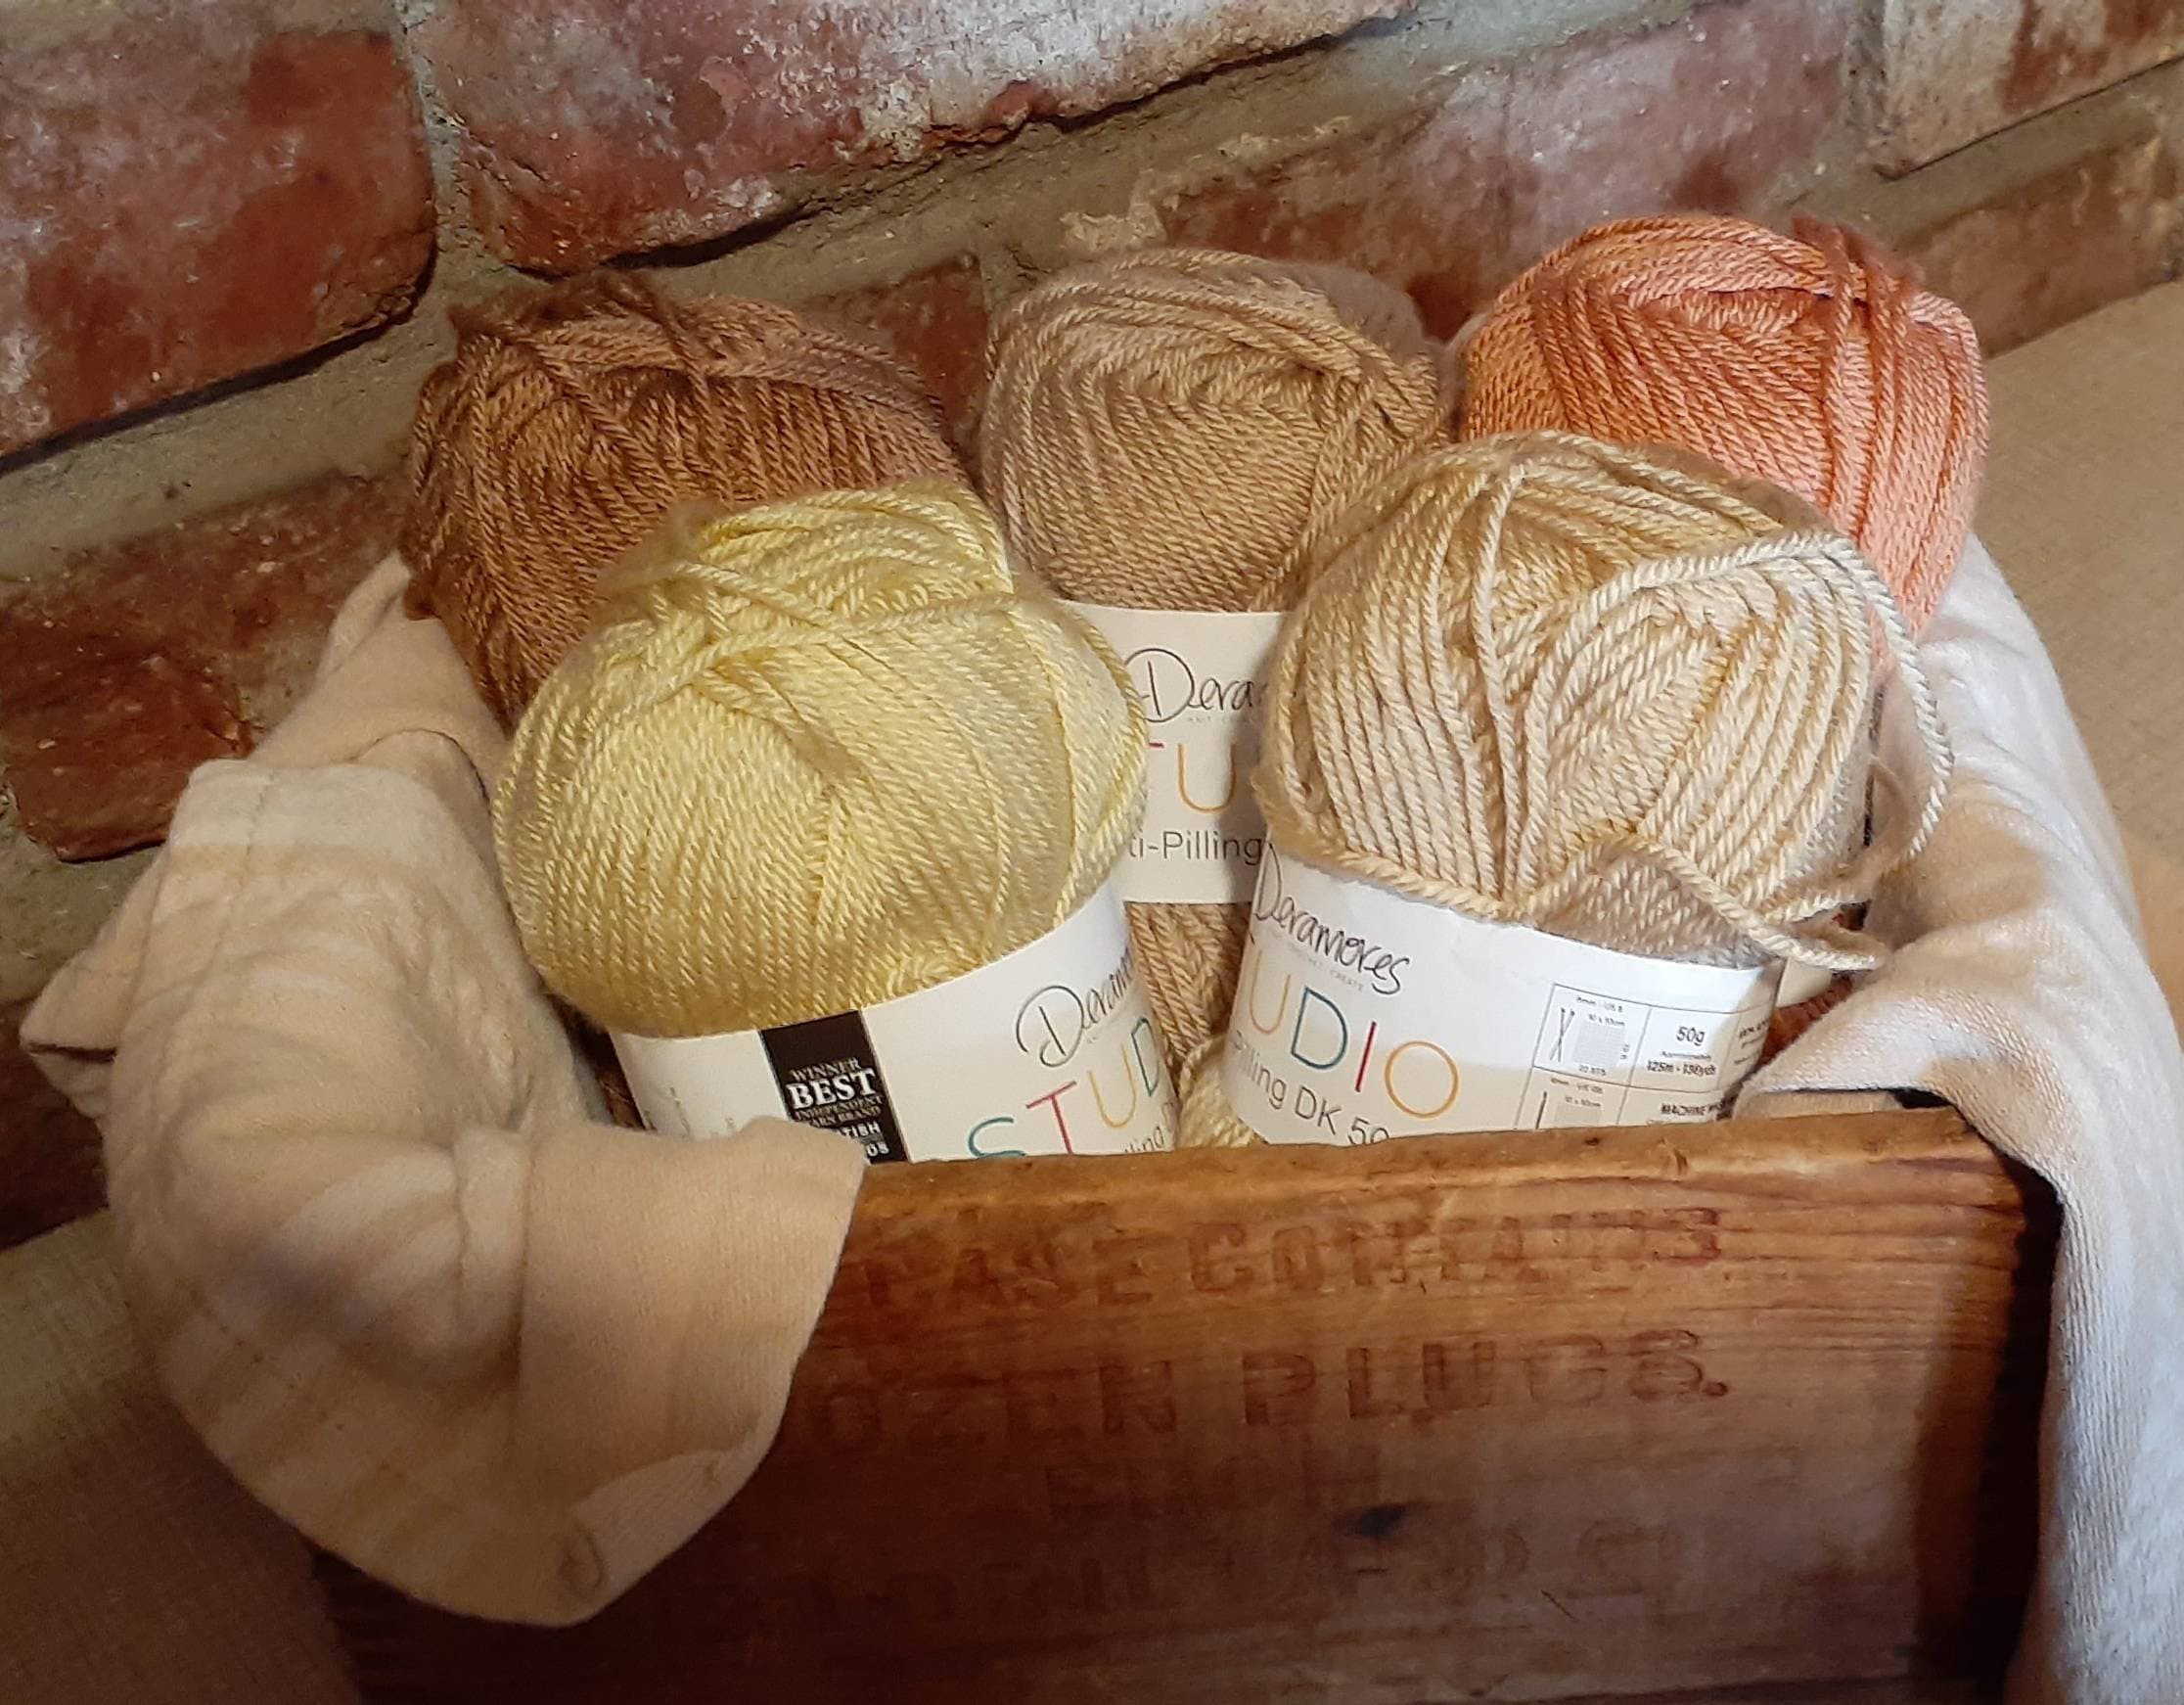 Deramores Studio Anti-pilling Chunky yarn, Autumn, lot of 2 (87 yds ea)